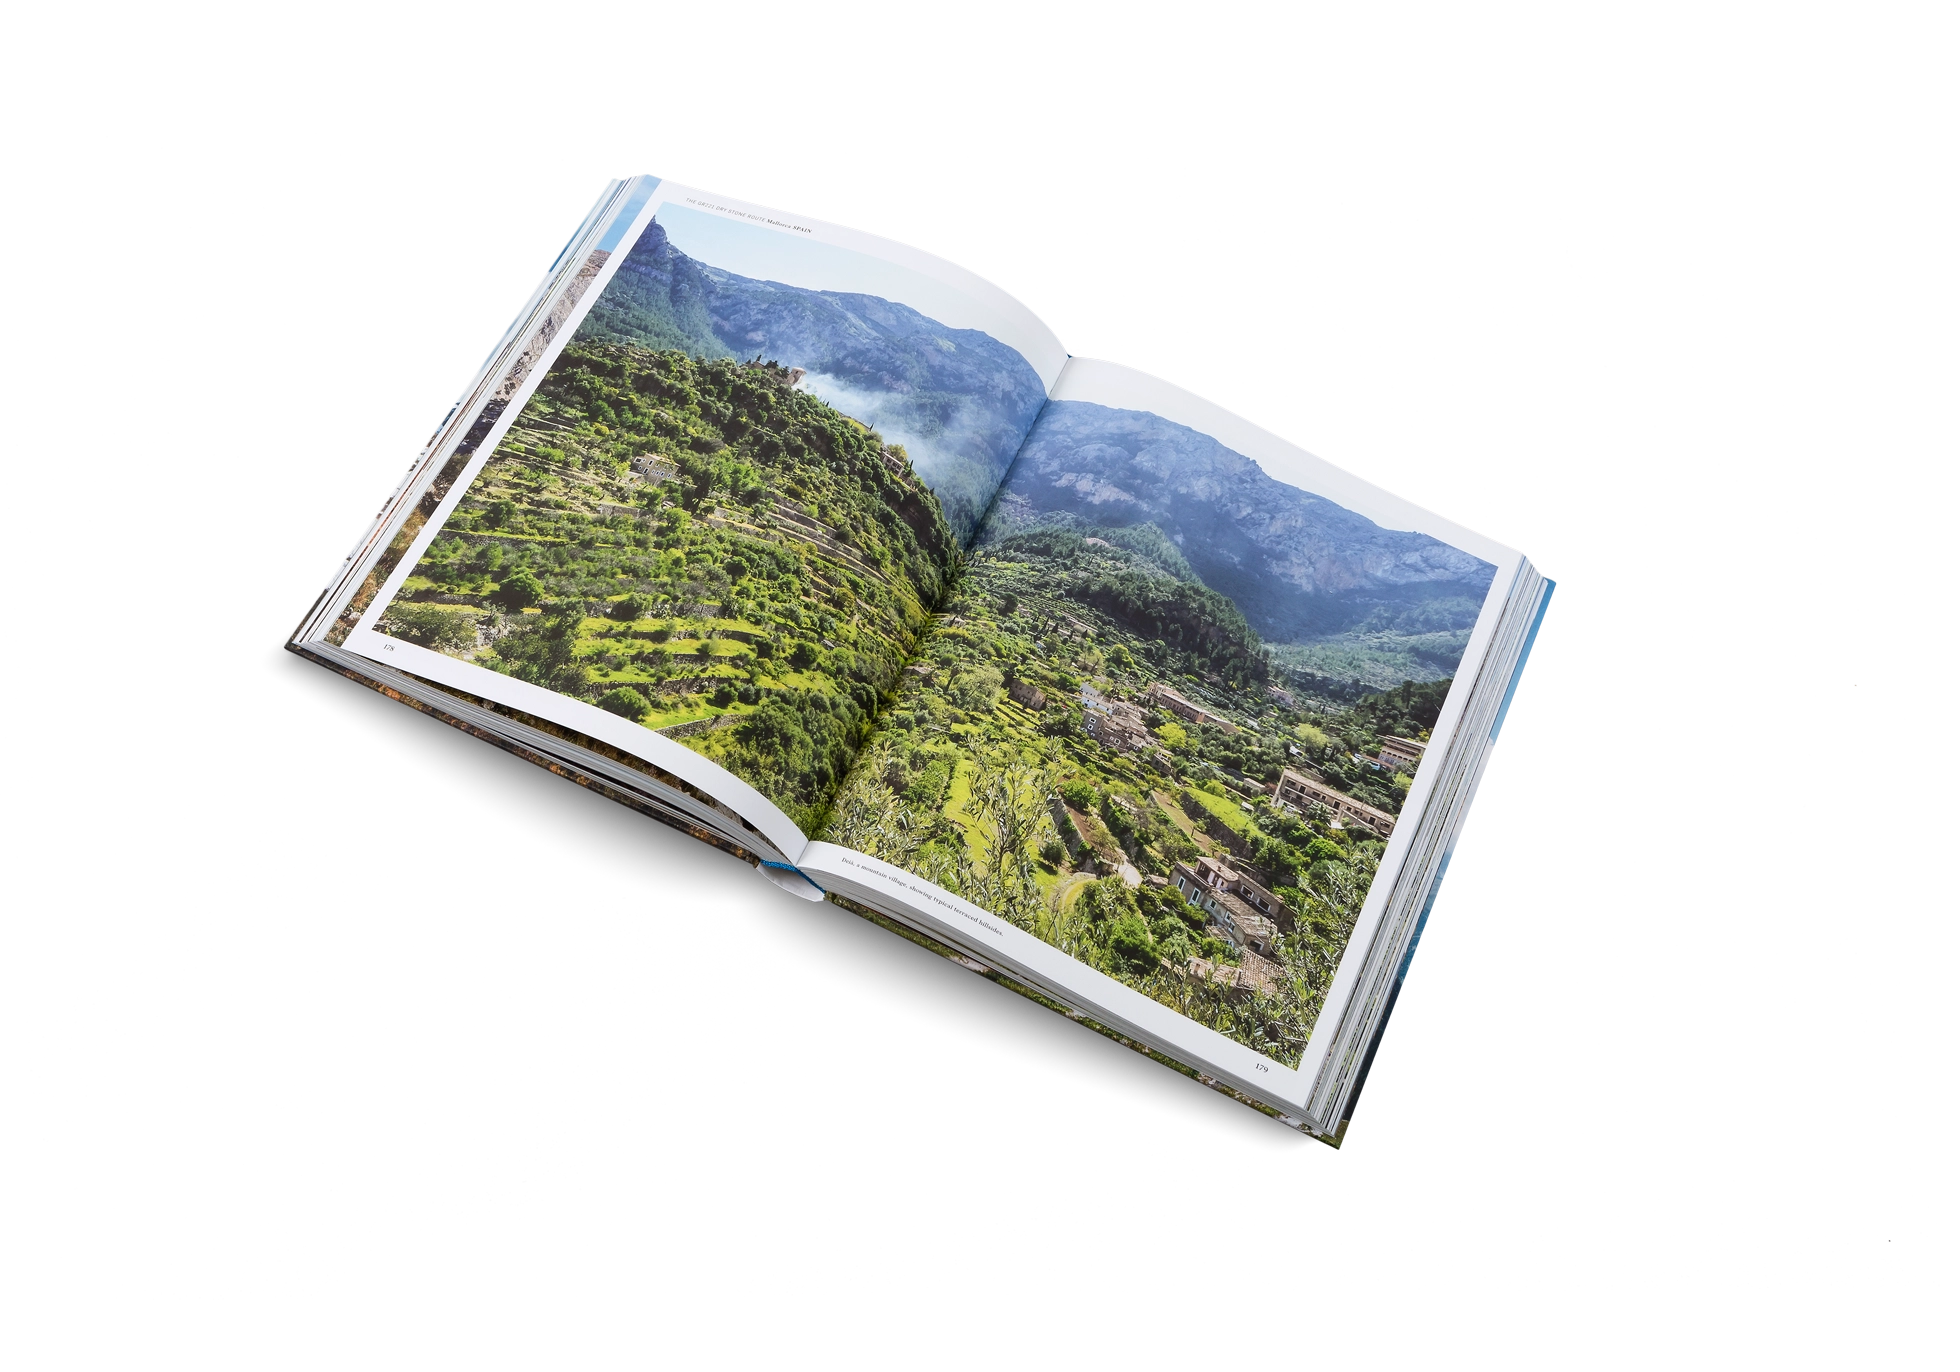 Wanderlust Europe - The Great European Hike, libro